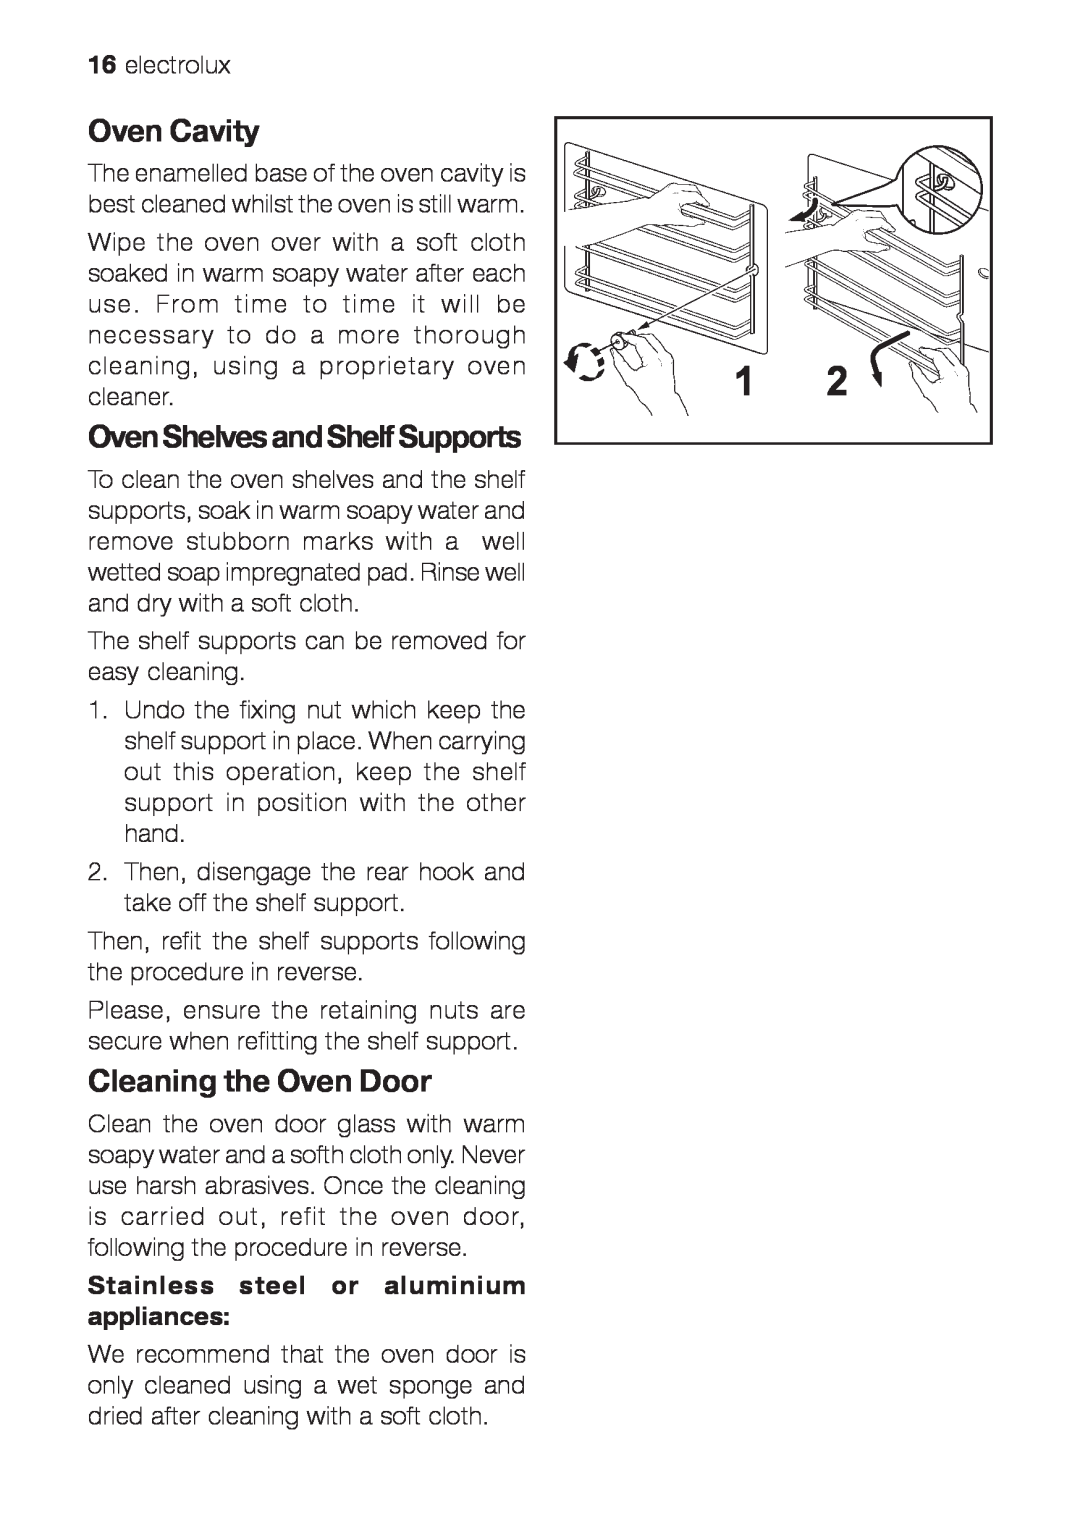 Electrolux EOG 10000 user manual Oven Cavity, OvenShelvesandShelfSupports, Cleaning the Oven Door 